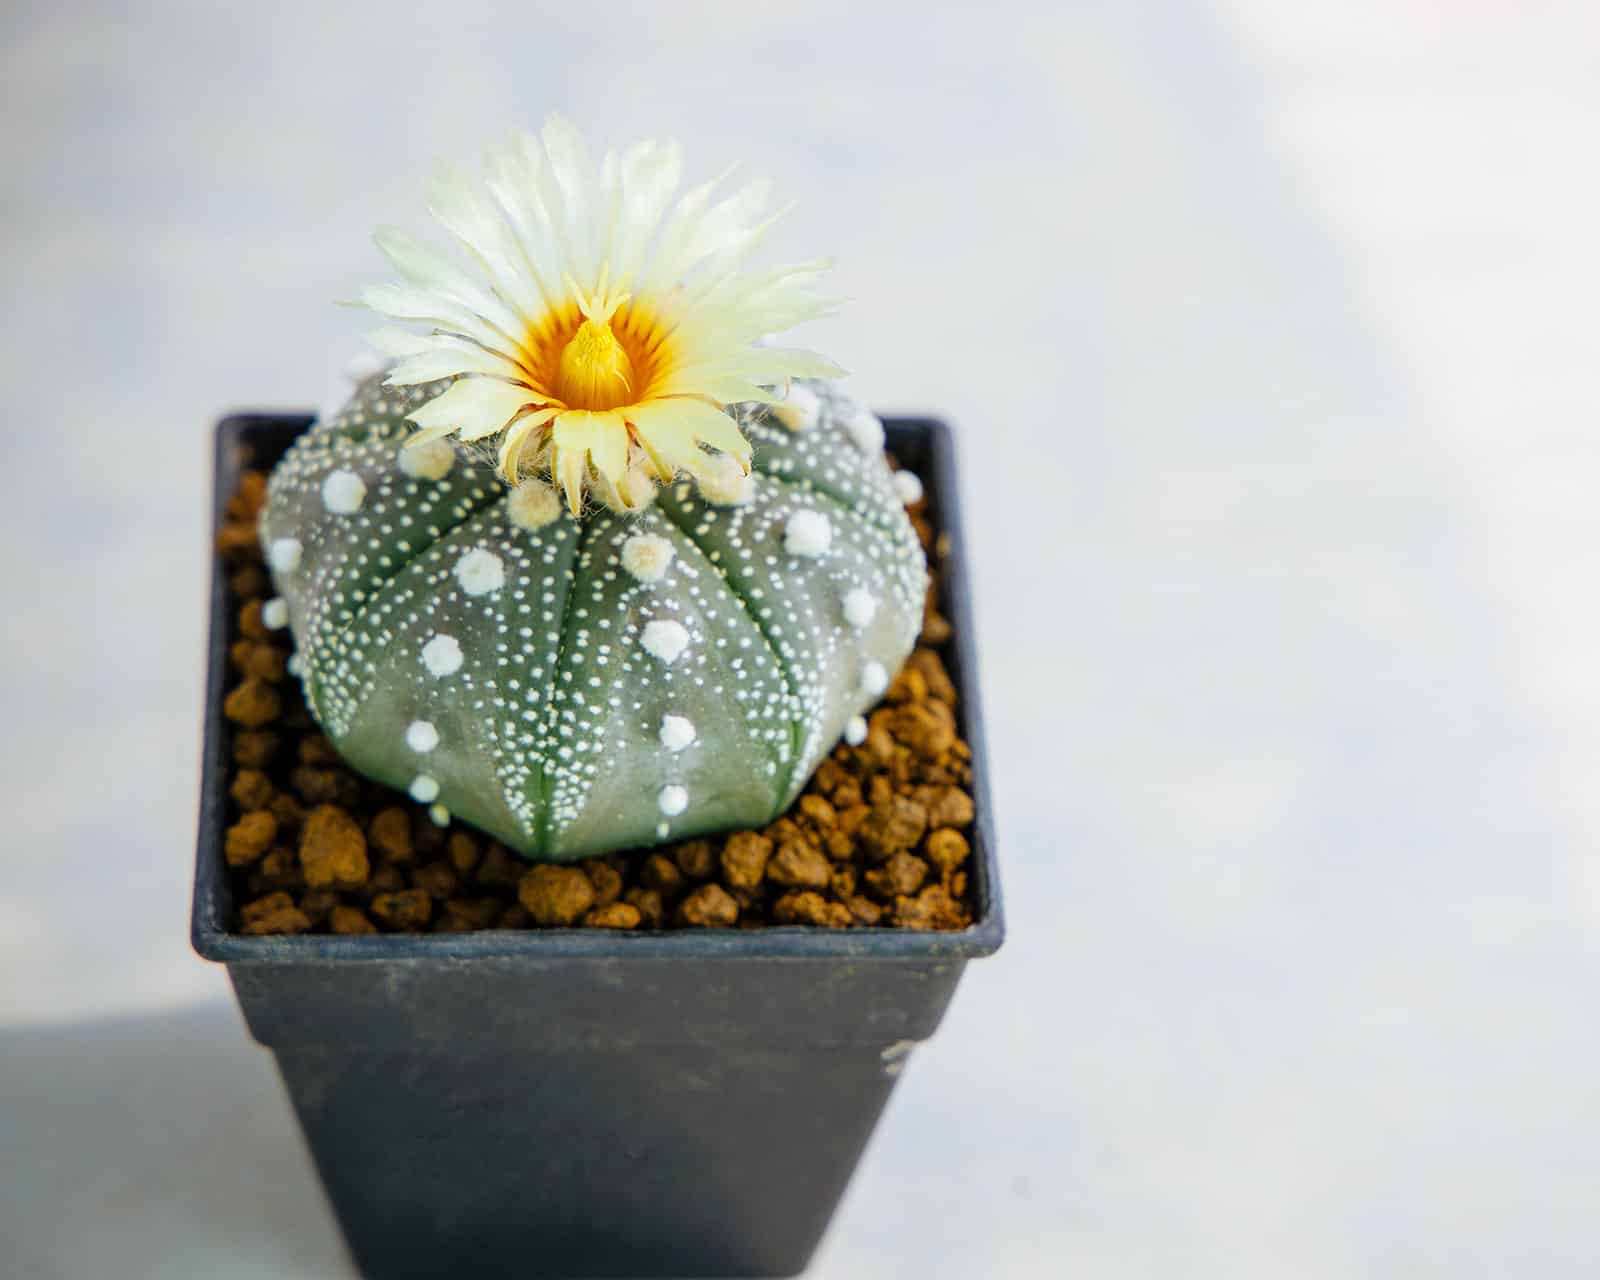 Astrophytum cactus with creamy white daisy-like flower